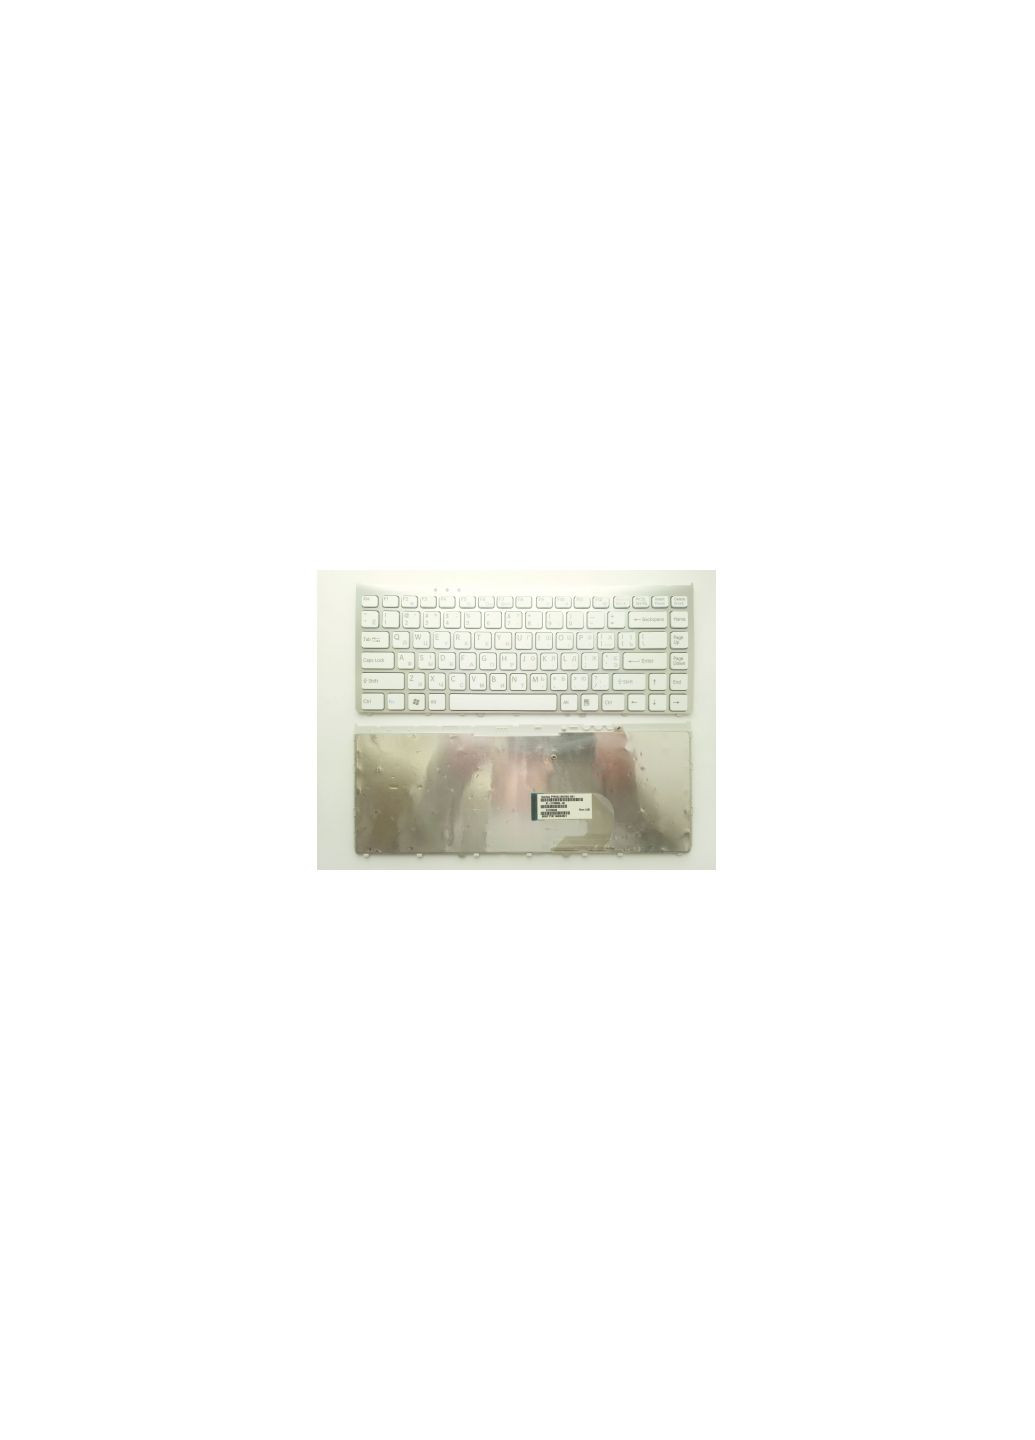 Клавиатура ноутбука VGNFW series белая UA (A43345) Sony vgn-fw series белая ua (276707410)